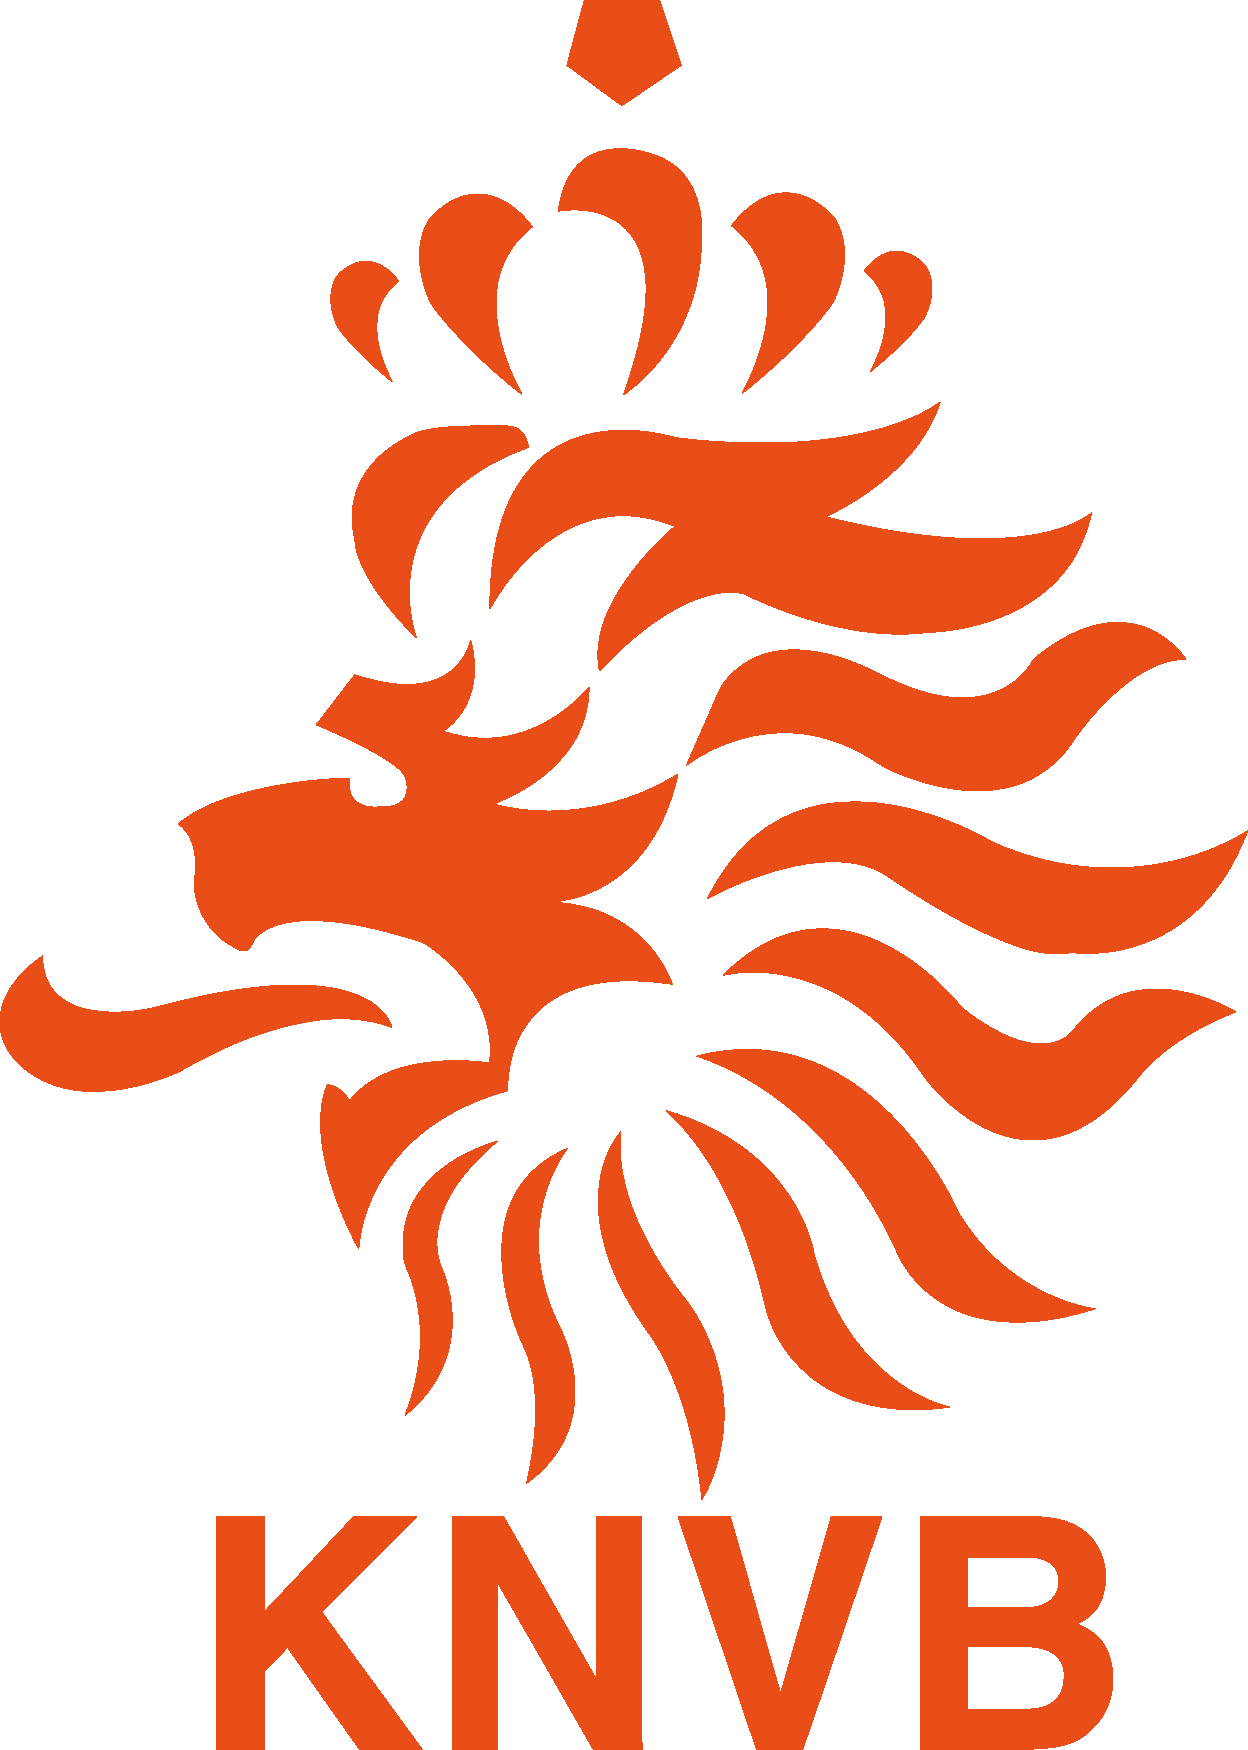 KNVB Logo   Royal Netherlands Football Association & National Team png